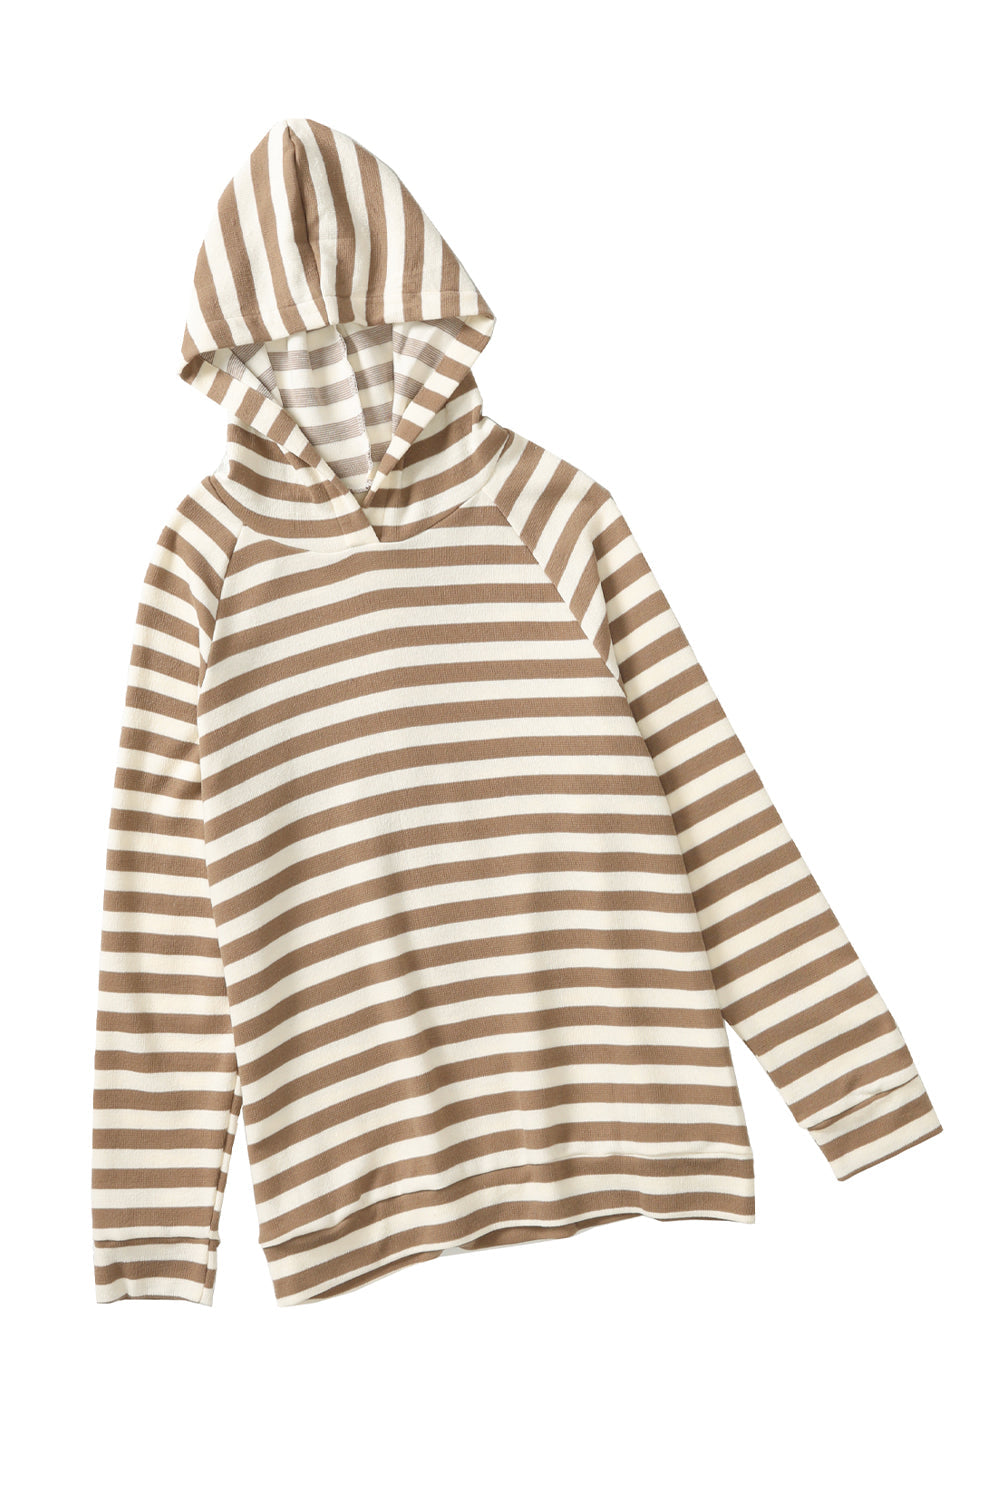 Striped Loose Pullover Hooded Sweatshirt